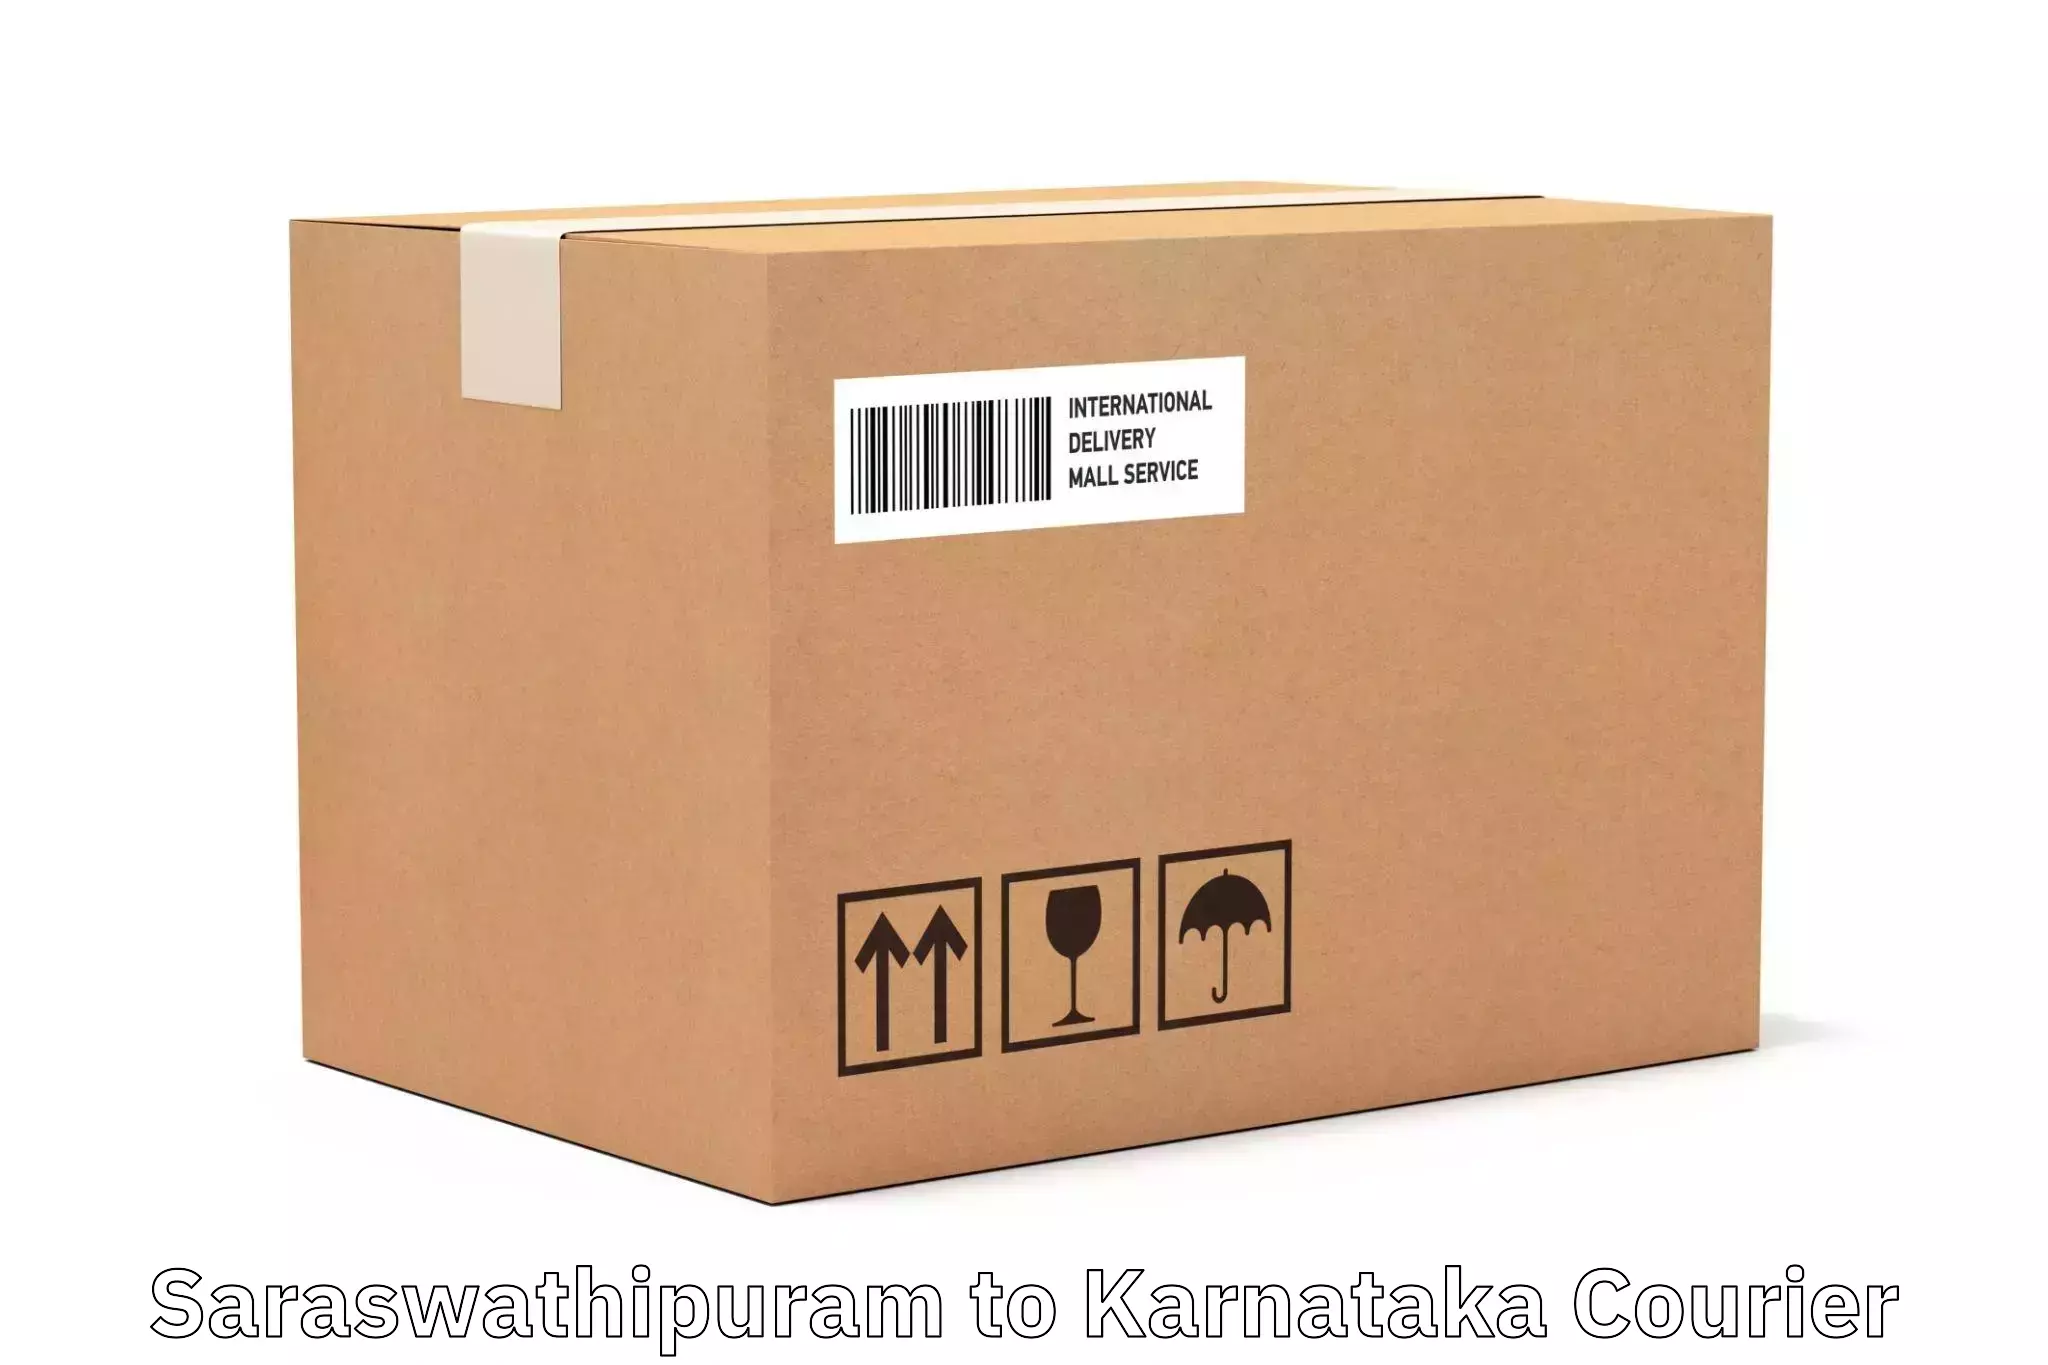 State-of-the-art courier technology Saraswathipuram to Baindur